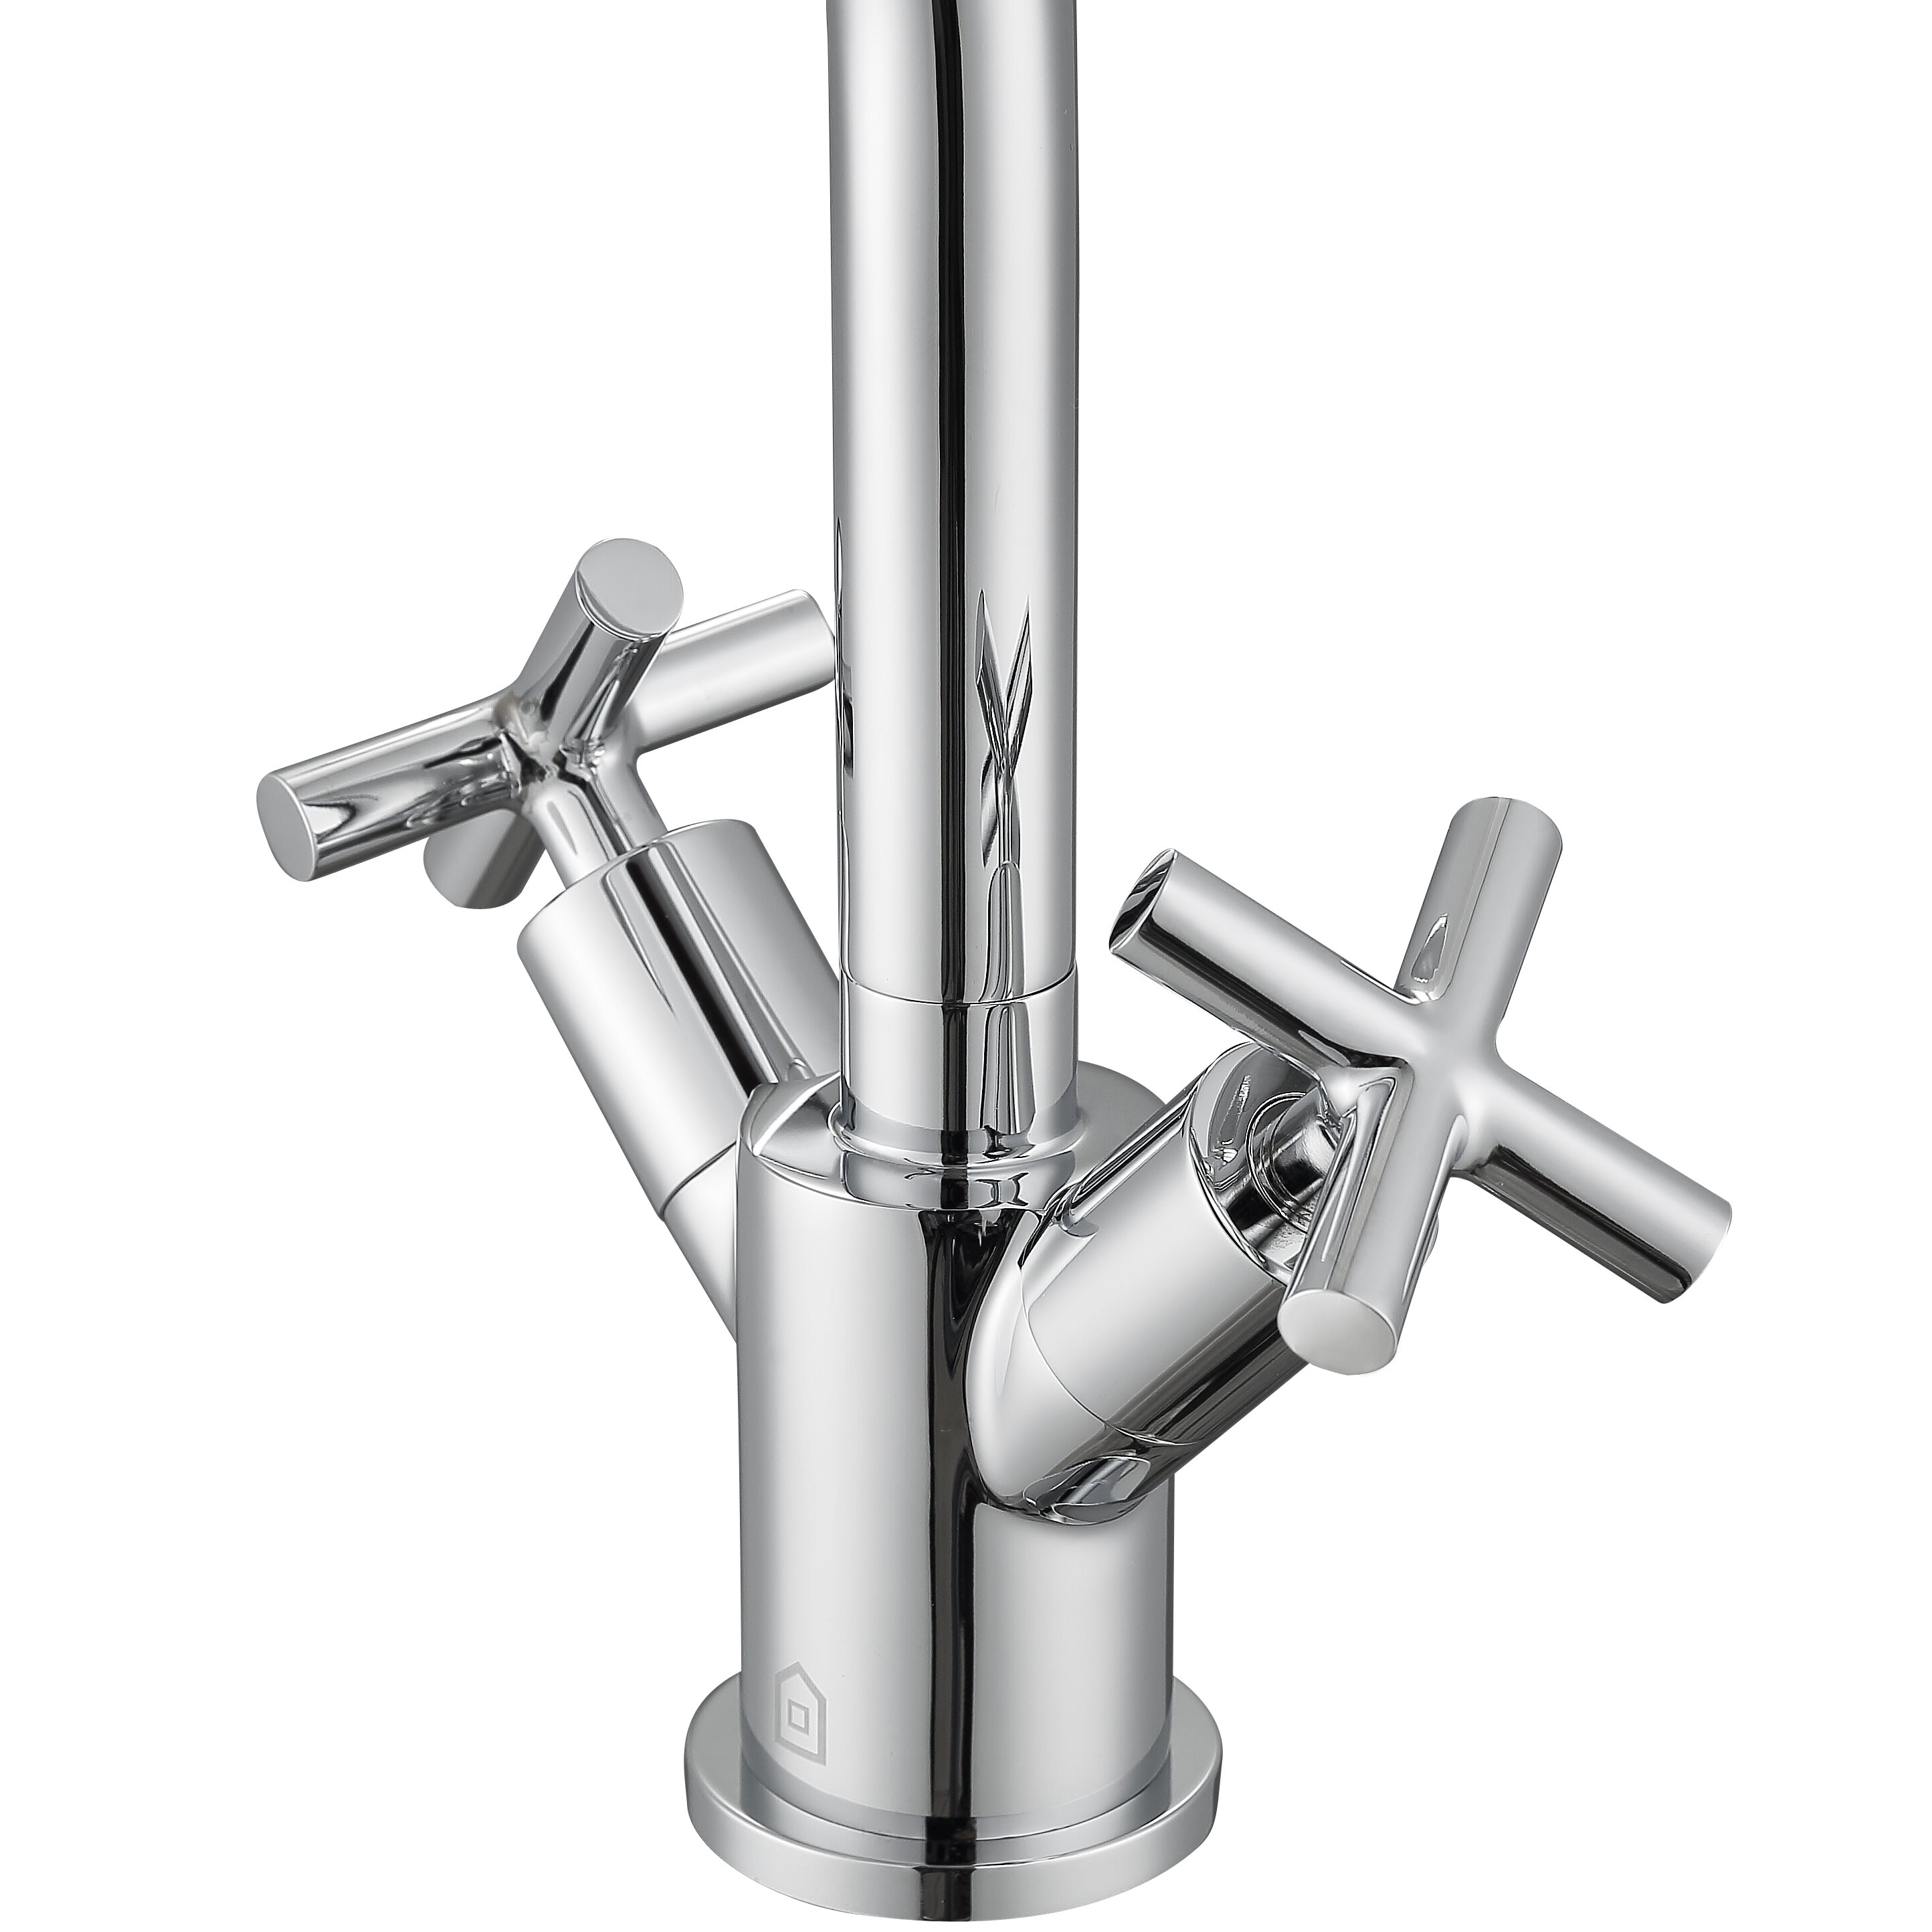 Ava Series Single Hole Cross Handle Bathroom Faucet in Chrome